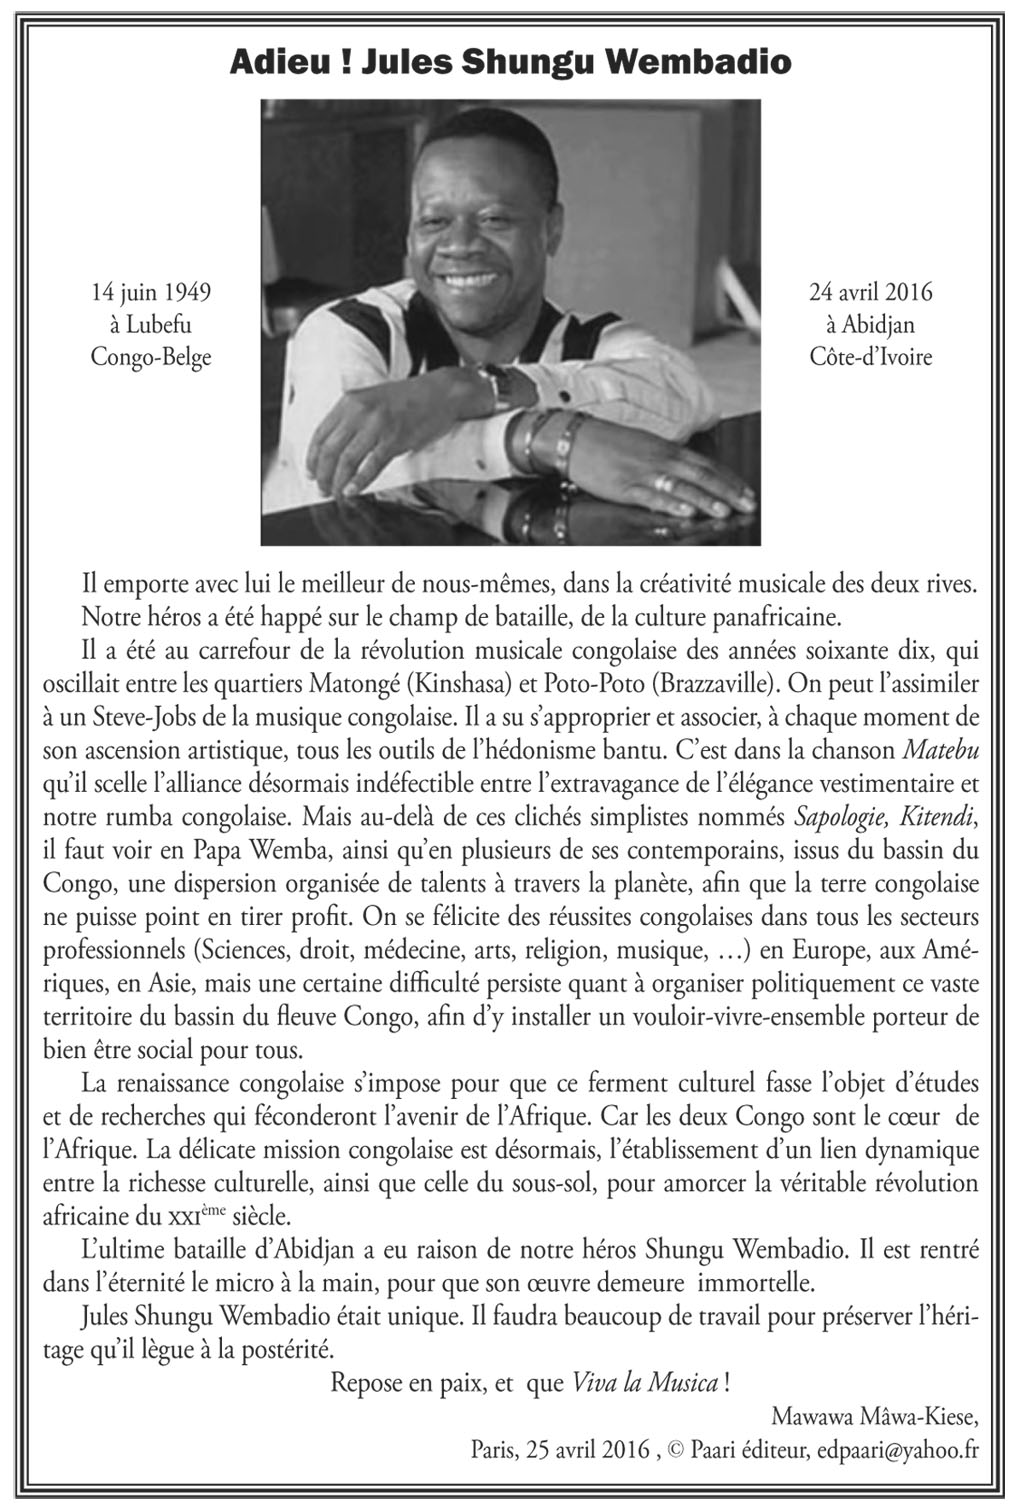 Adieu! Jules Shungu Wembadio (Papa Wemba)